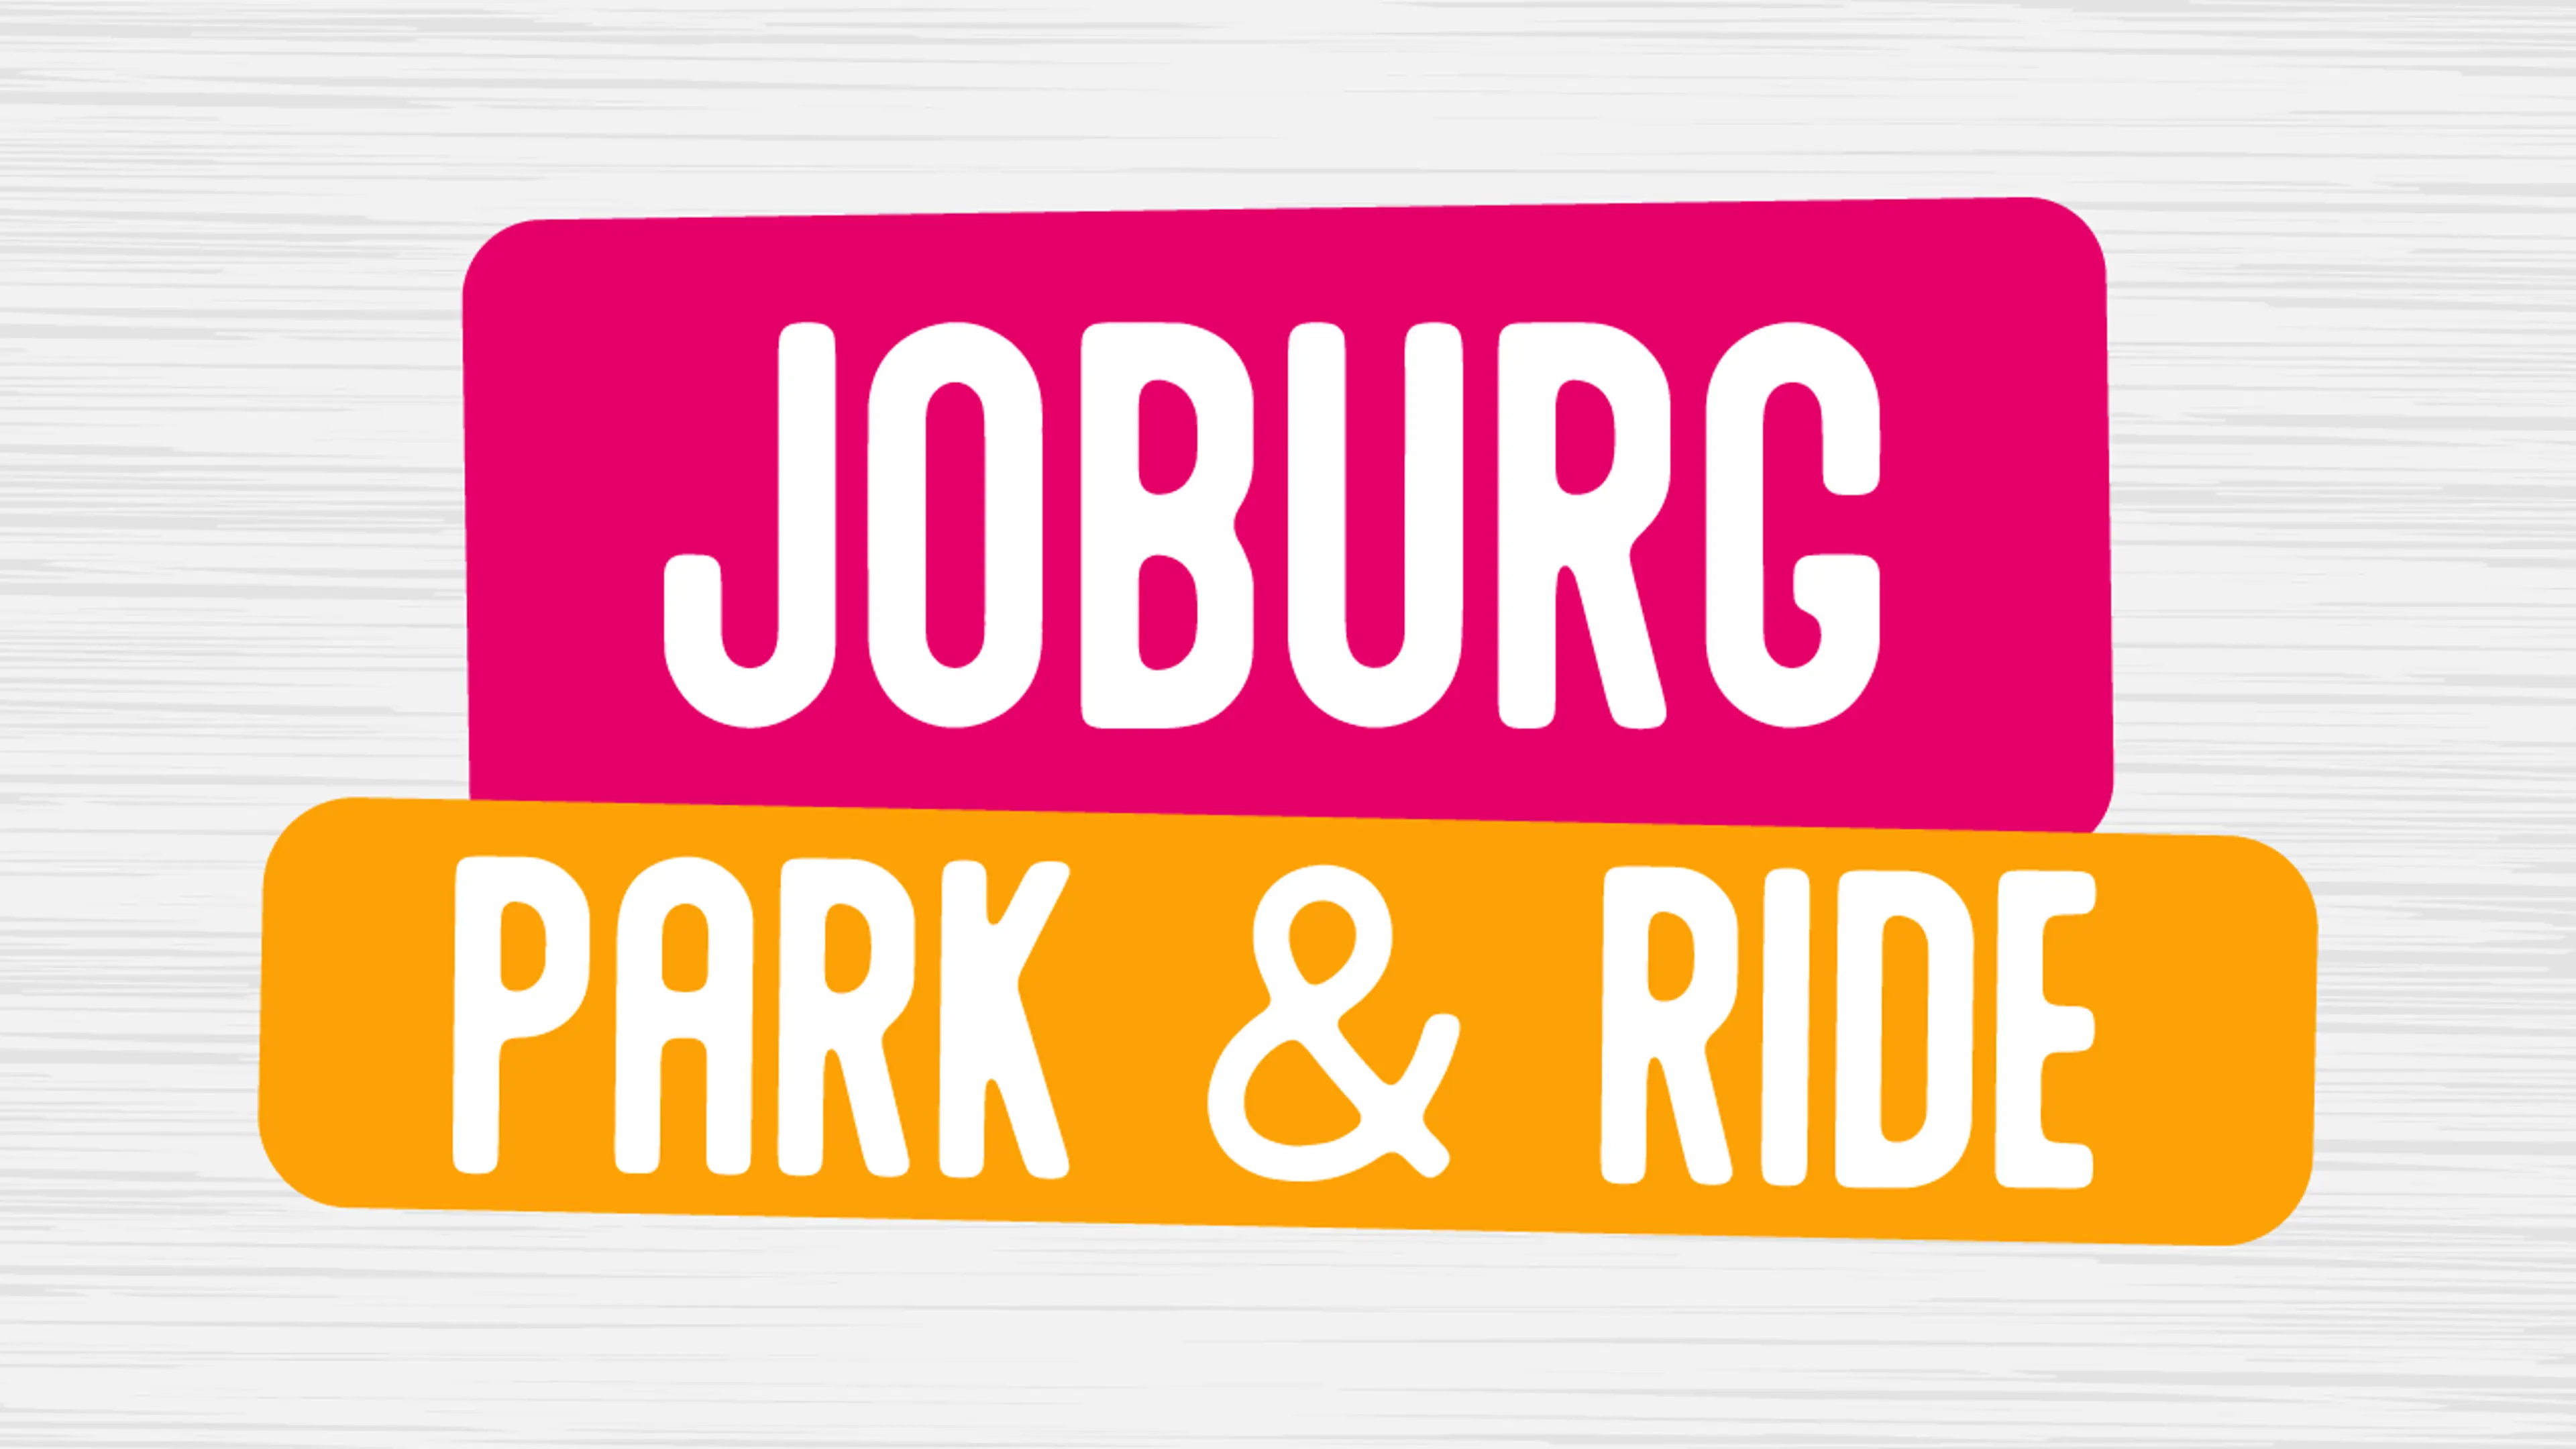 Johannesburg Park and Ride